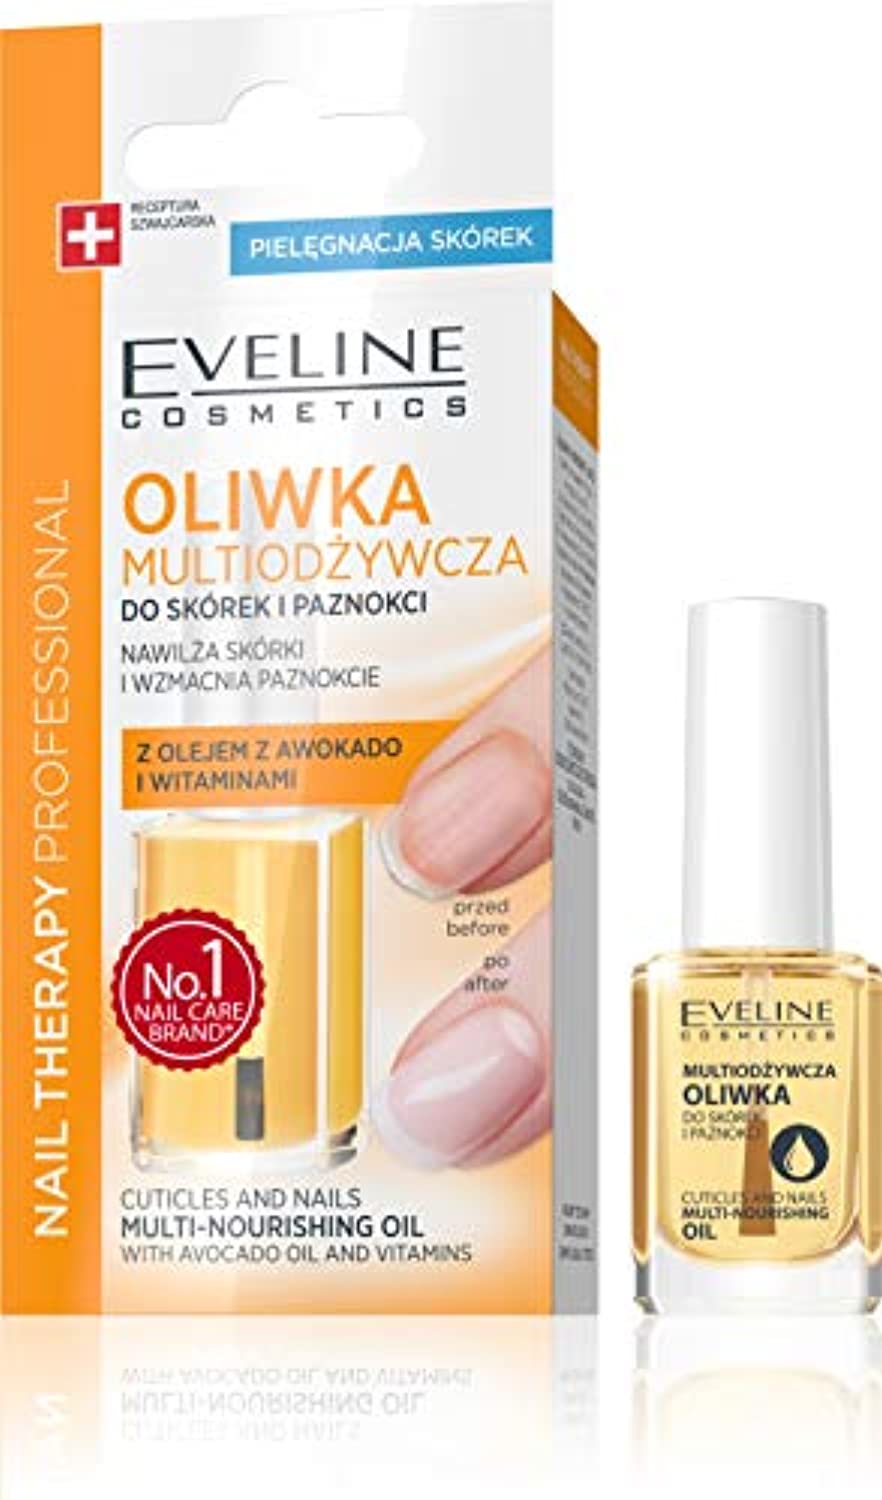 Eveline Cosmetics Cuticle and Nails Multi-Nourishing Oil with Avocado Oil & Vitamins